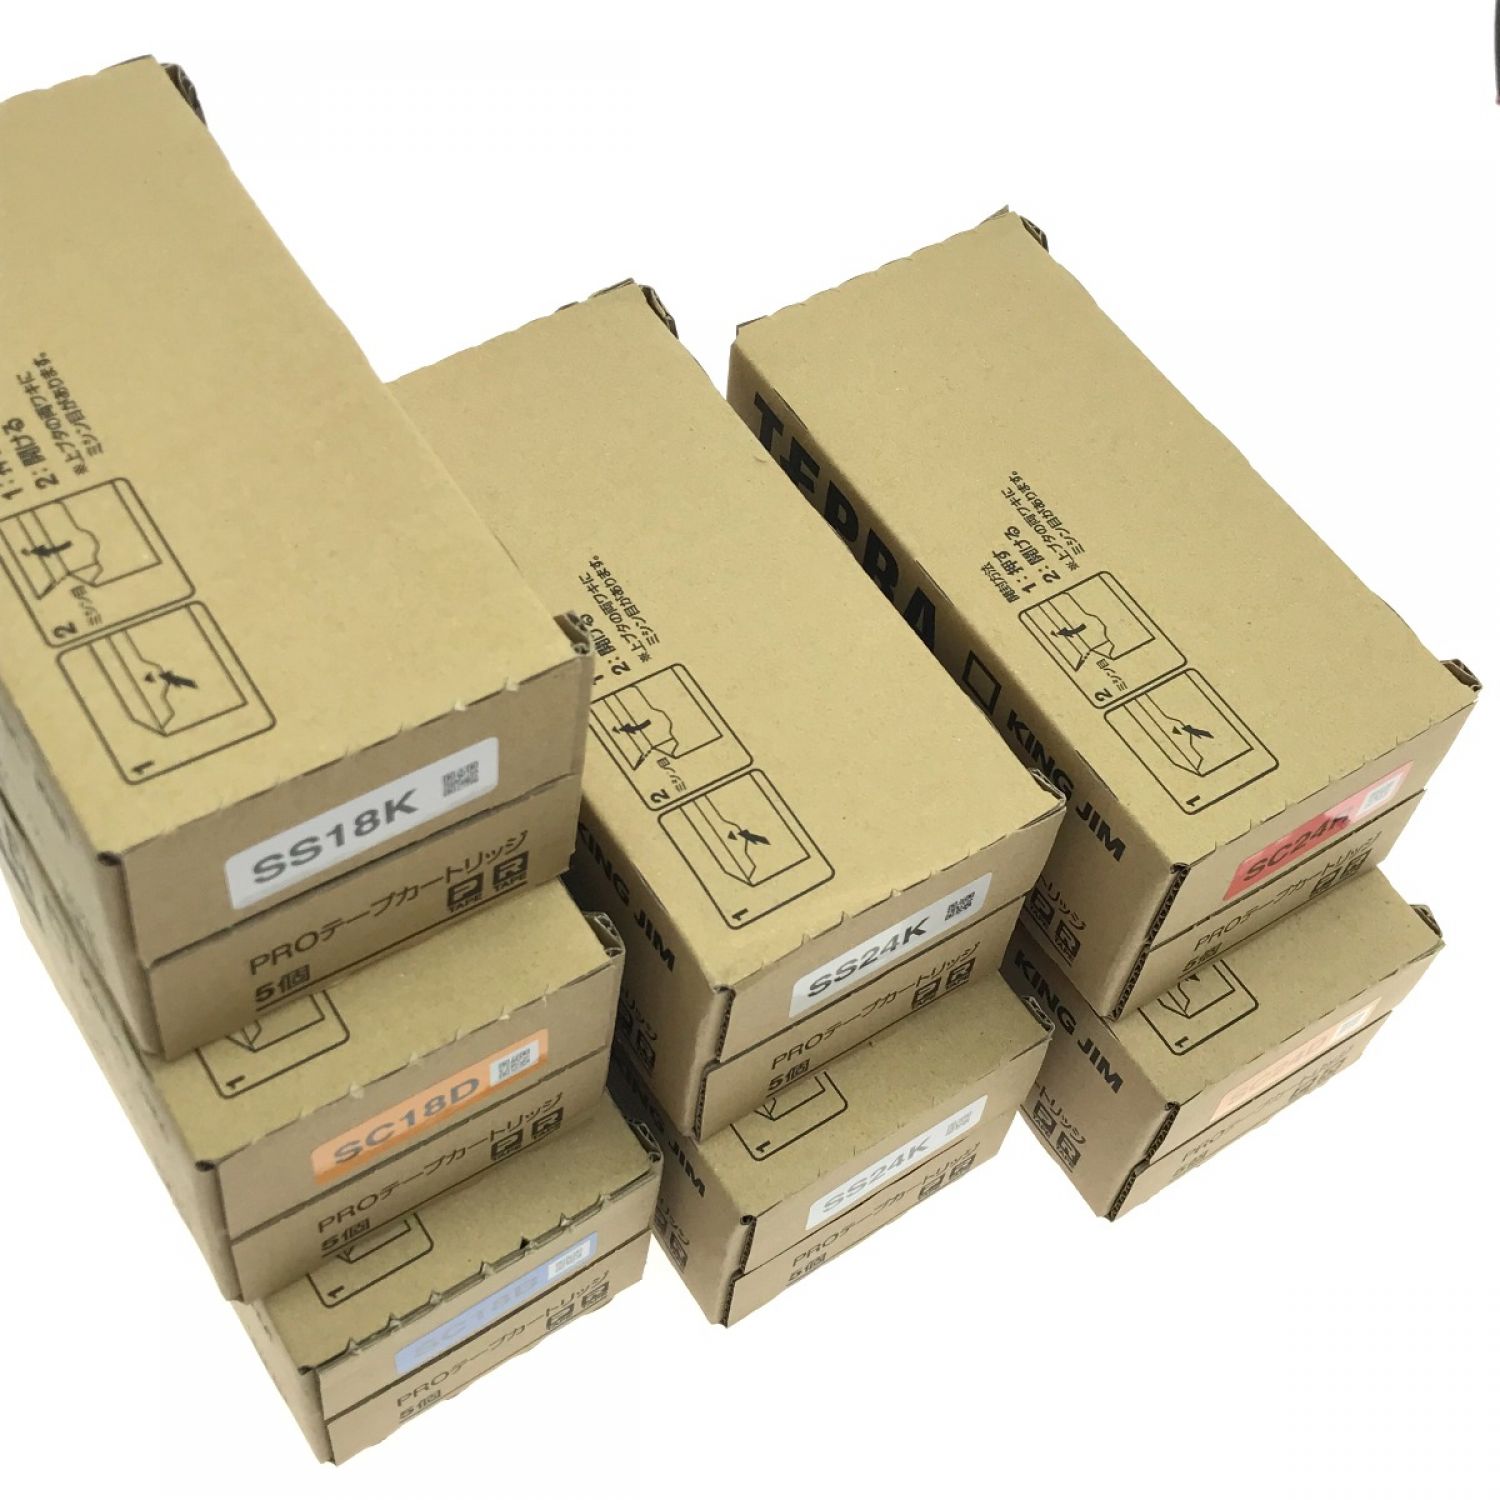 TEPRA PRO テプラ テープカードリッジ 5個×7箱セット まとめ売り Nランク